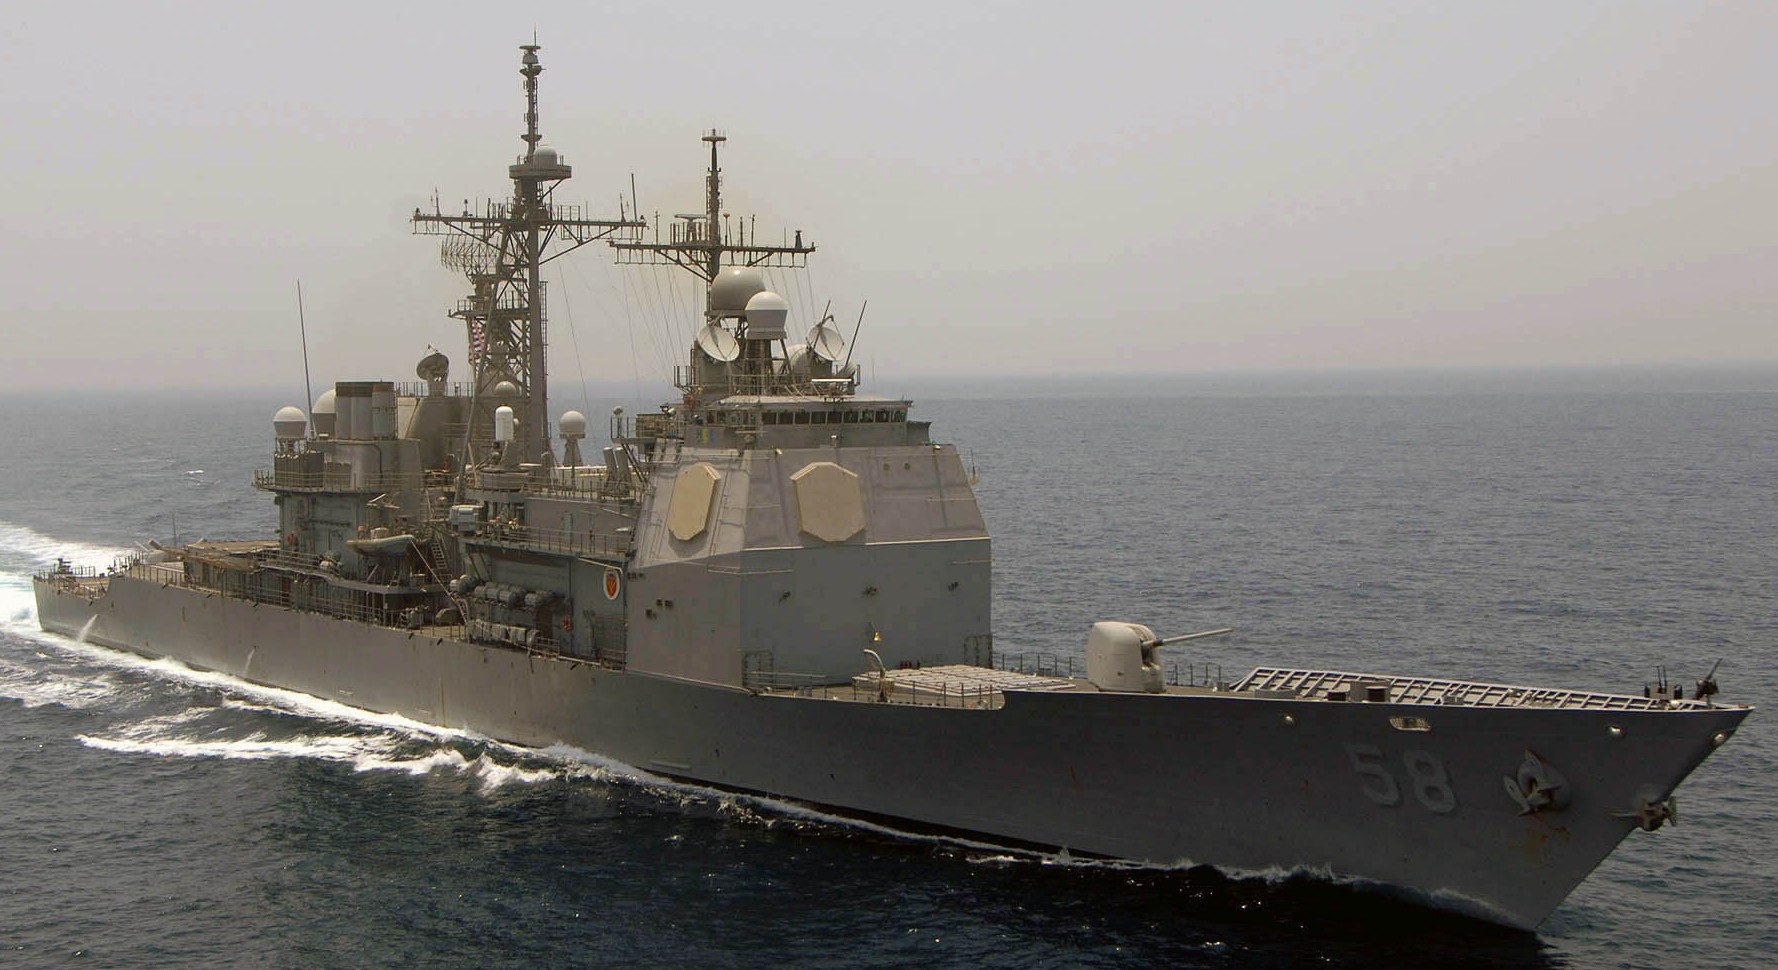 cg-58 uss philippine sea ticonderoga class guided missile cruiser aegis us navy persian gulf 14